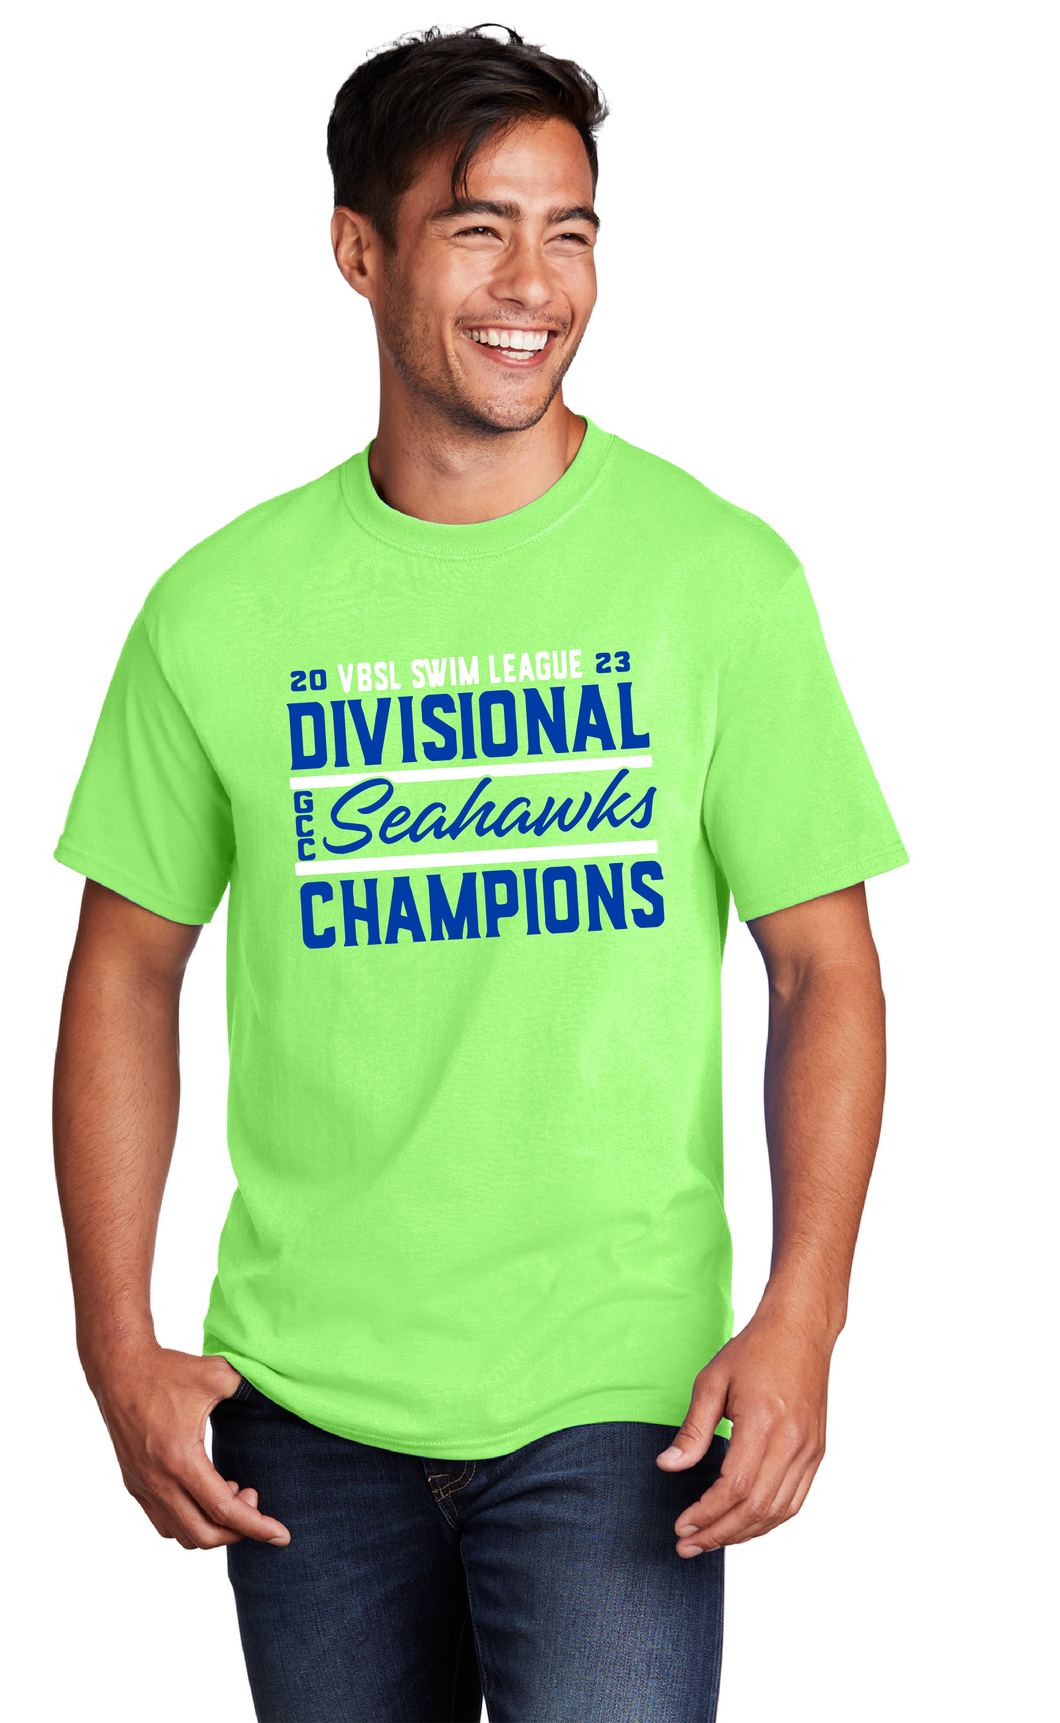 Divisional Champions Core Cotton Tee / Neon Green / Greenbrier Seahawks Swim Team